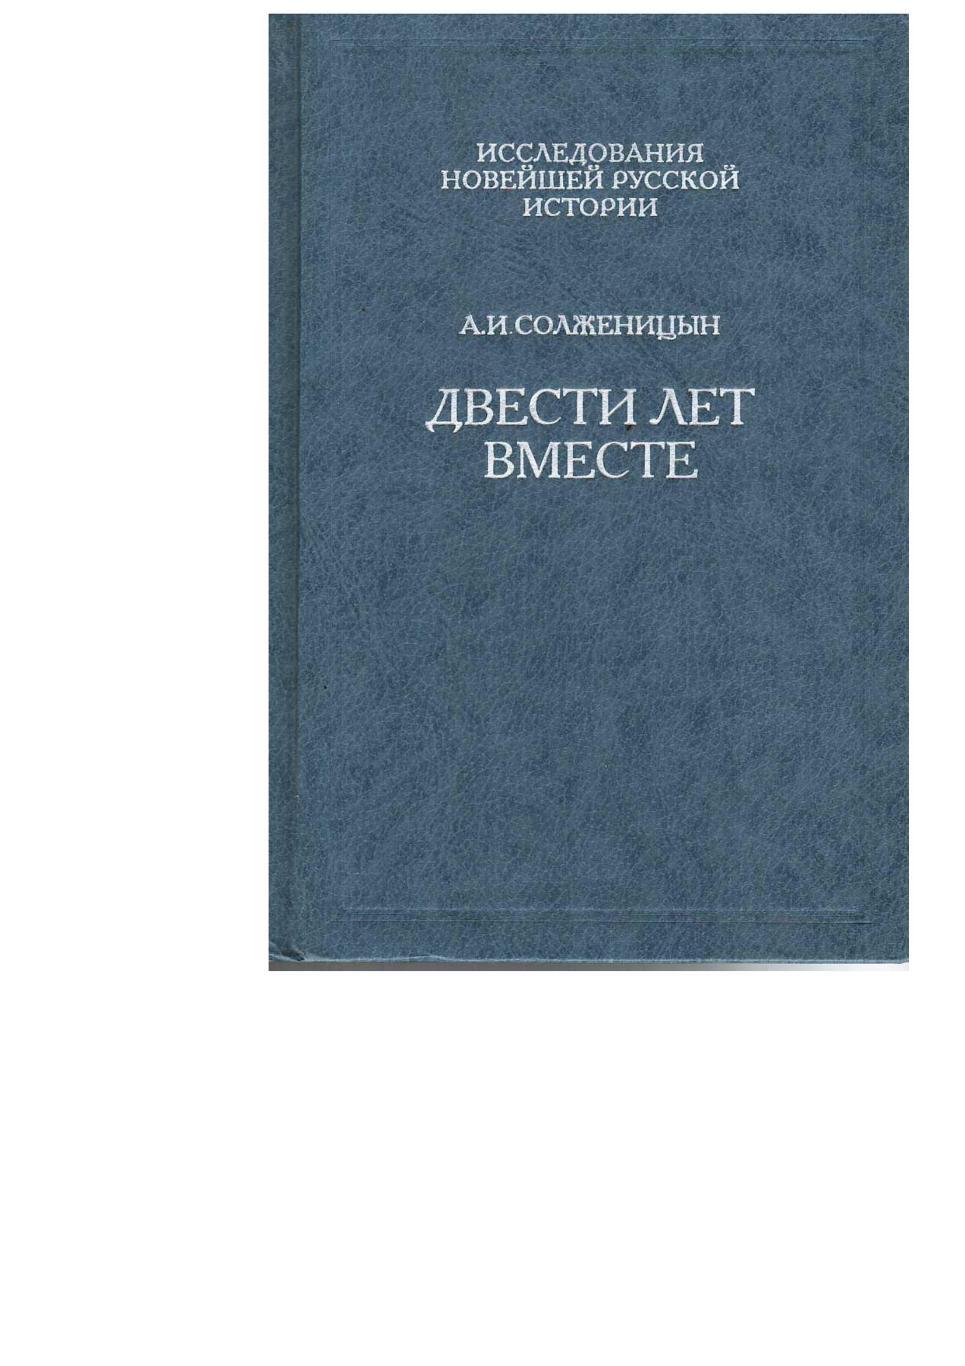 Солженицын А.Н. Двести лет вместе. Ч. 2. – М., 2002.